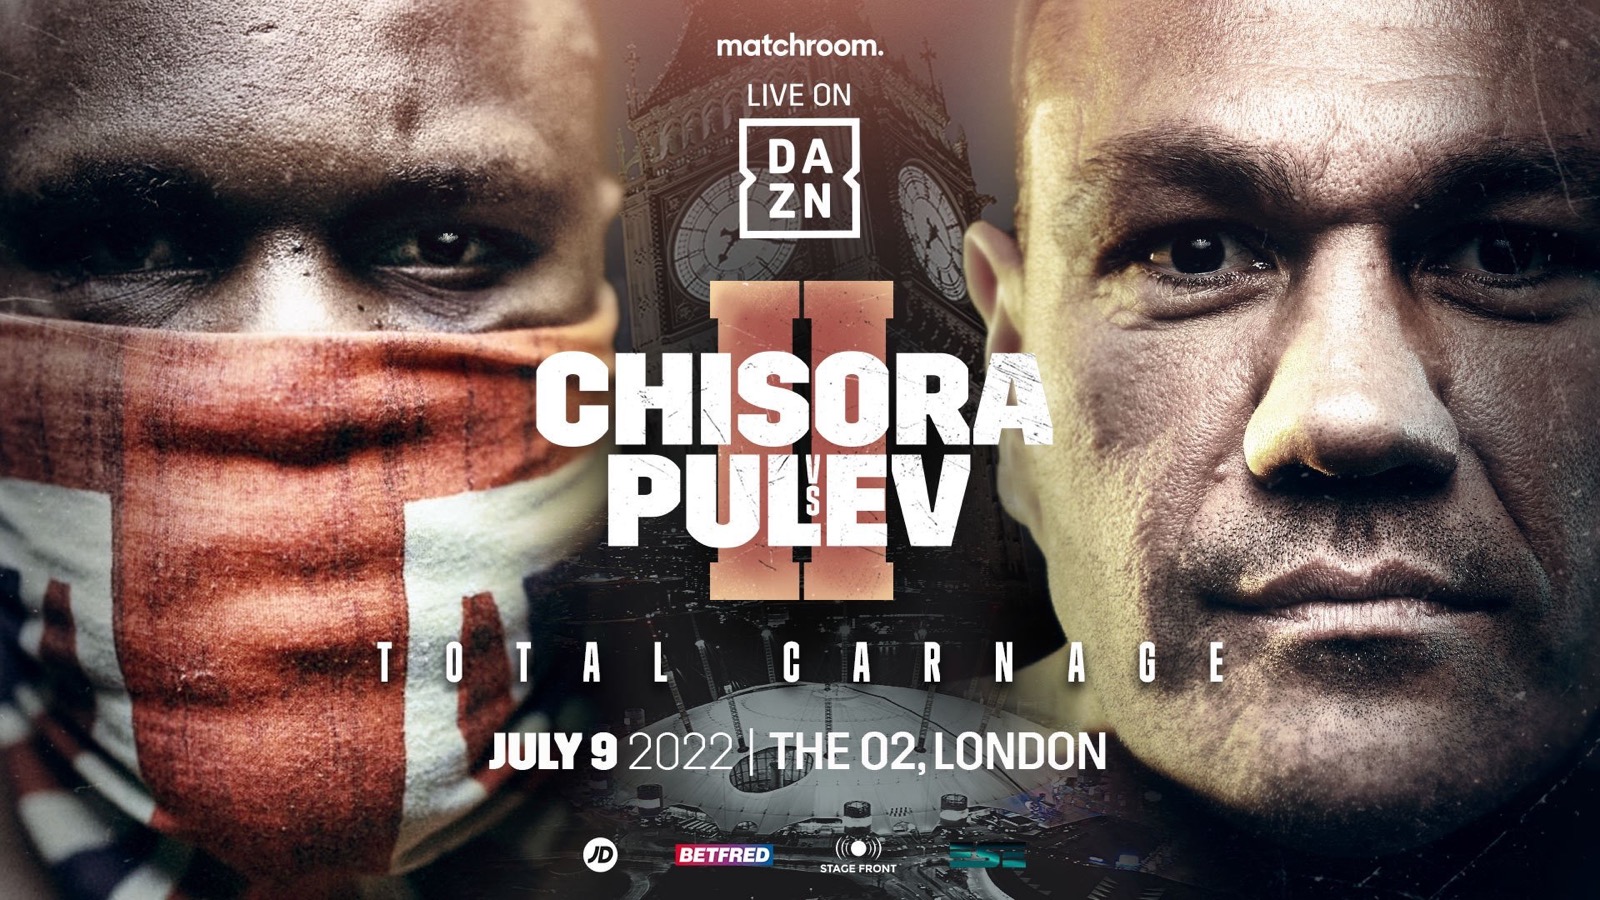 Image: Derek Chisora & Kubrat Pulev trade trash talk ahead of July 9th rematch